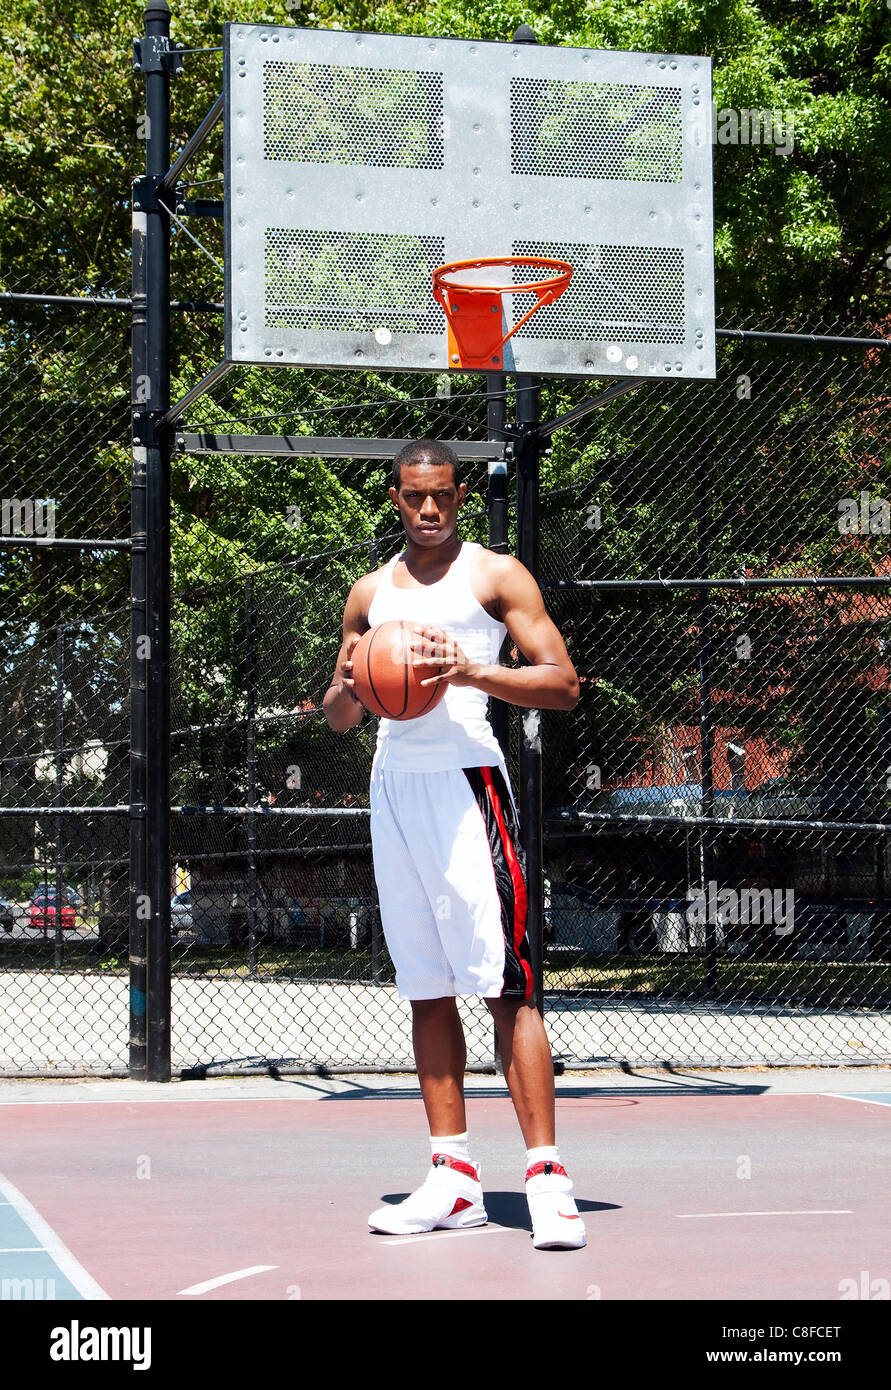 Basketball player with ball Stock Photo